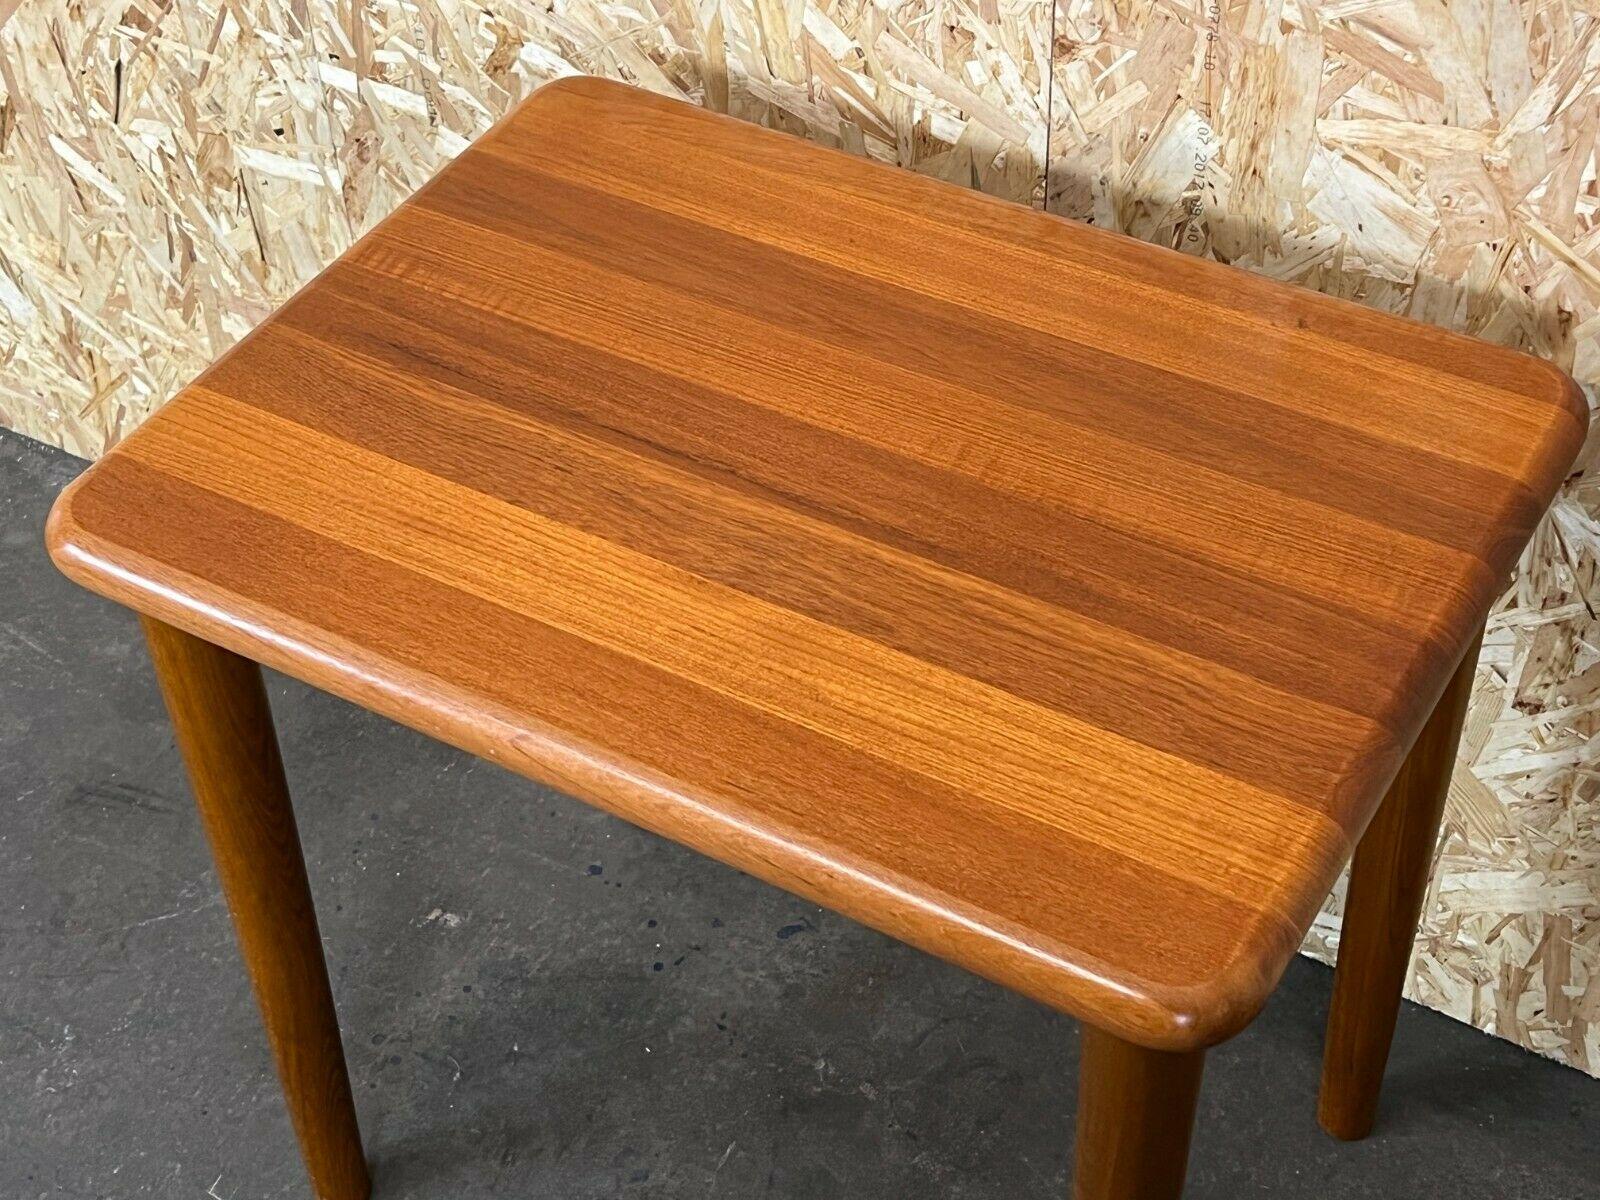 70s Teak Side Table Glostrup Danish Design Denmark Mid Century For Sale 1